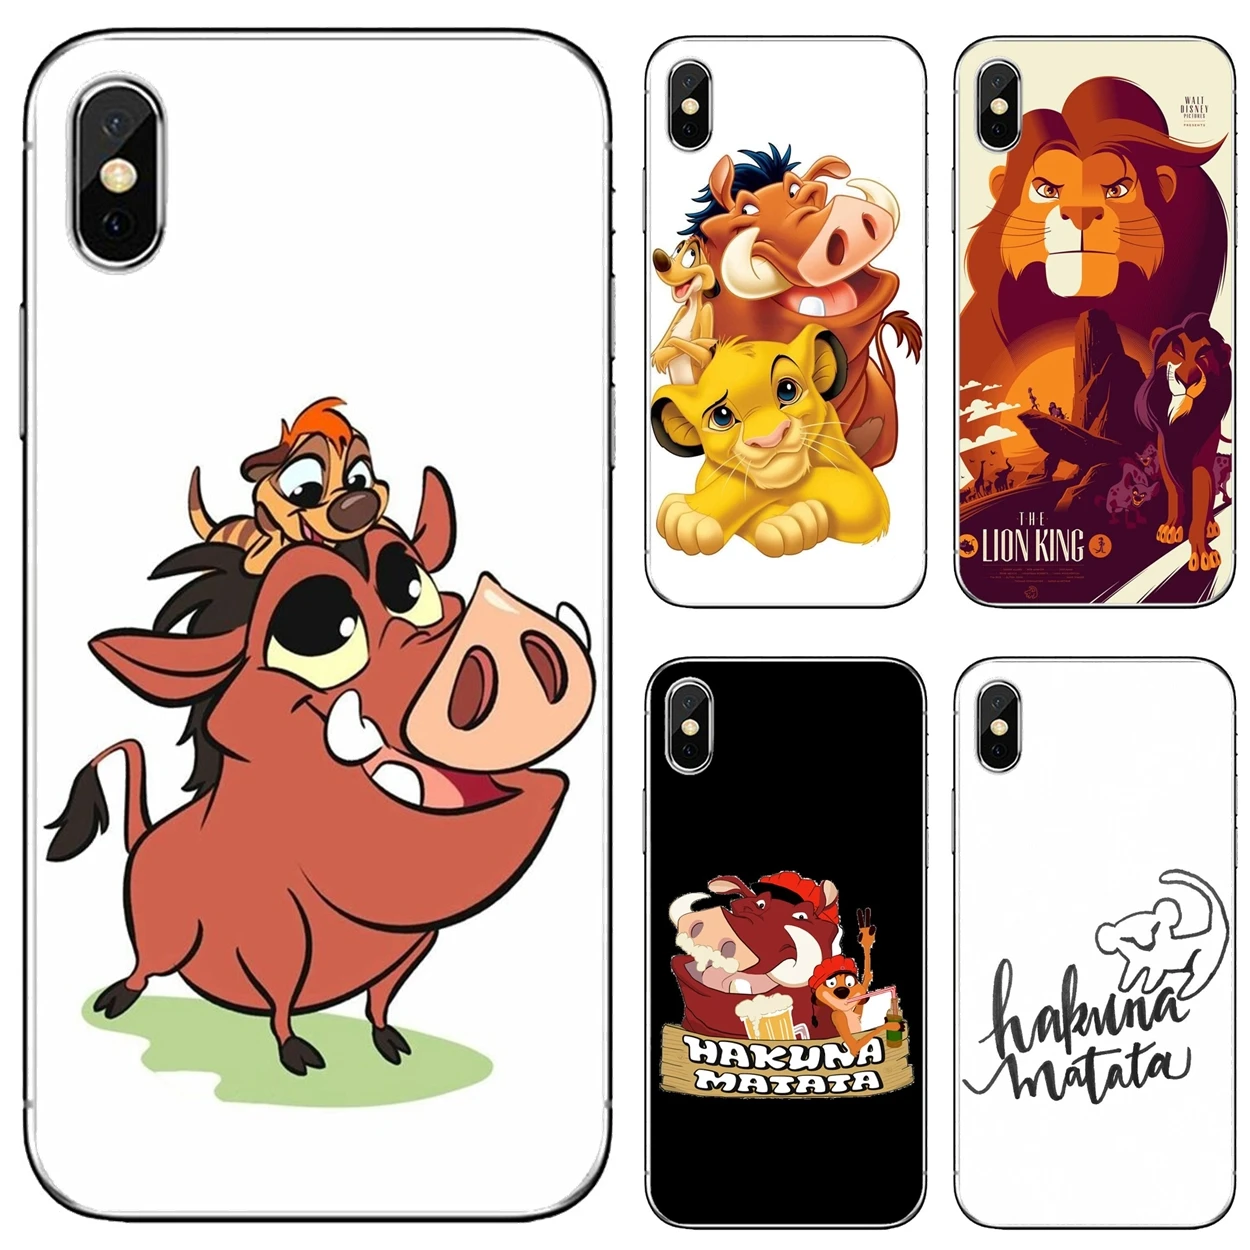 

Lion-King-Pumba-Hakuna-Matata For Apple iPhone 10 11 12 Pro Mini 4S 5S SE 5C 6 6S 7 8 X XR XS Plus Max 2020 TPU Silicone Case